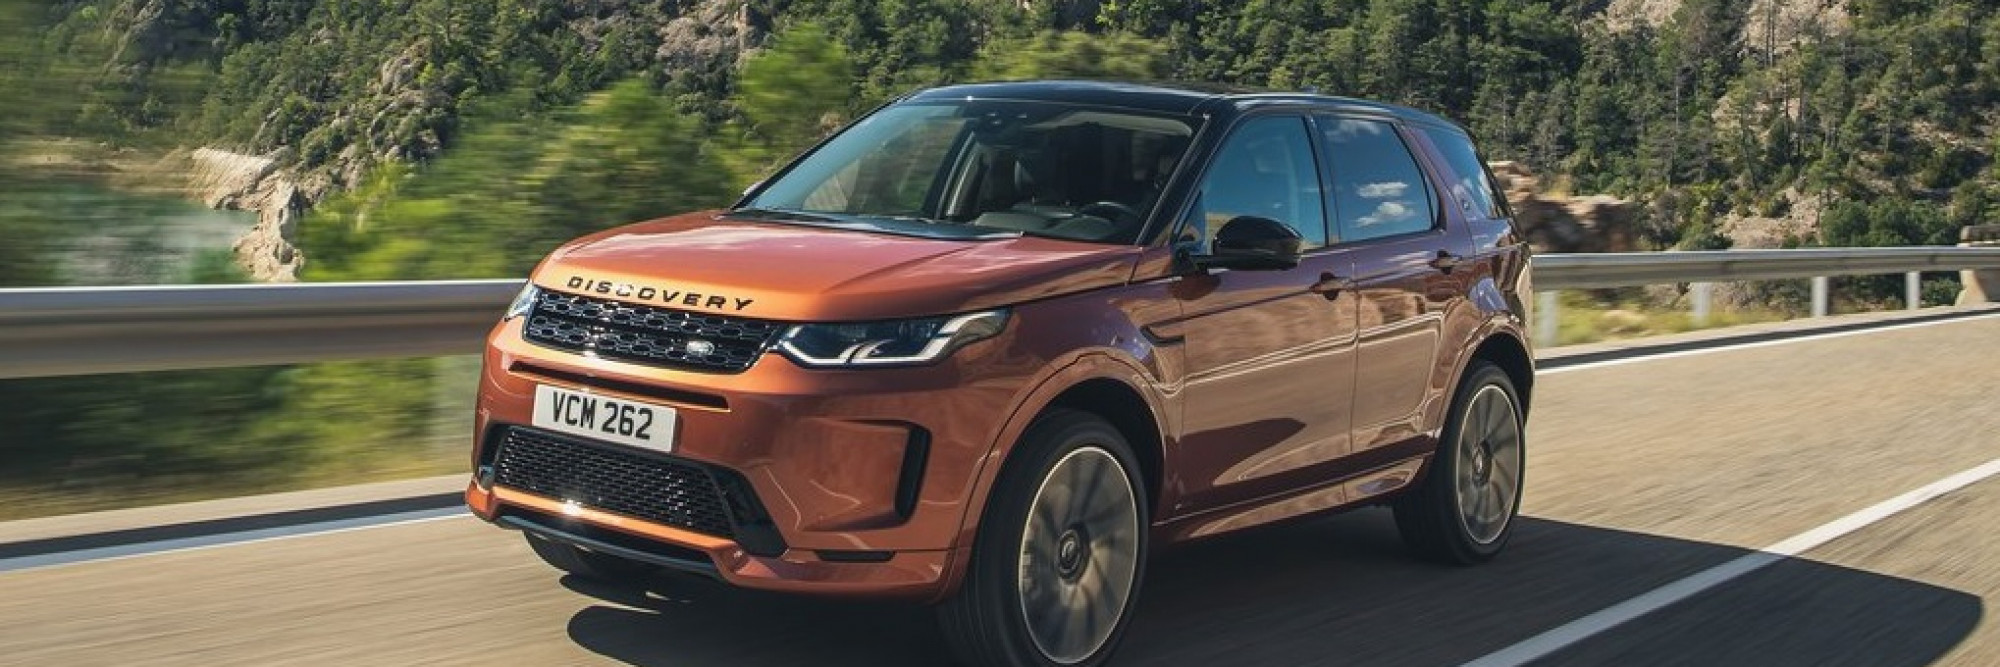 Land Rover Discovery Sport 2020 1024 20 v4